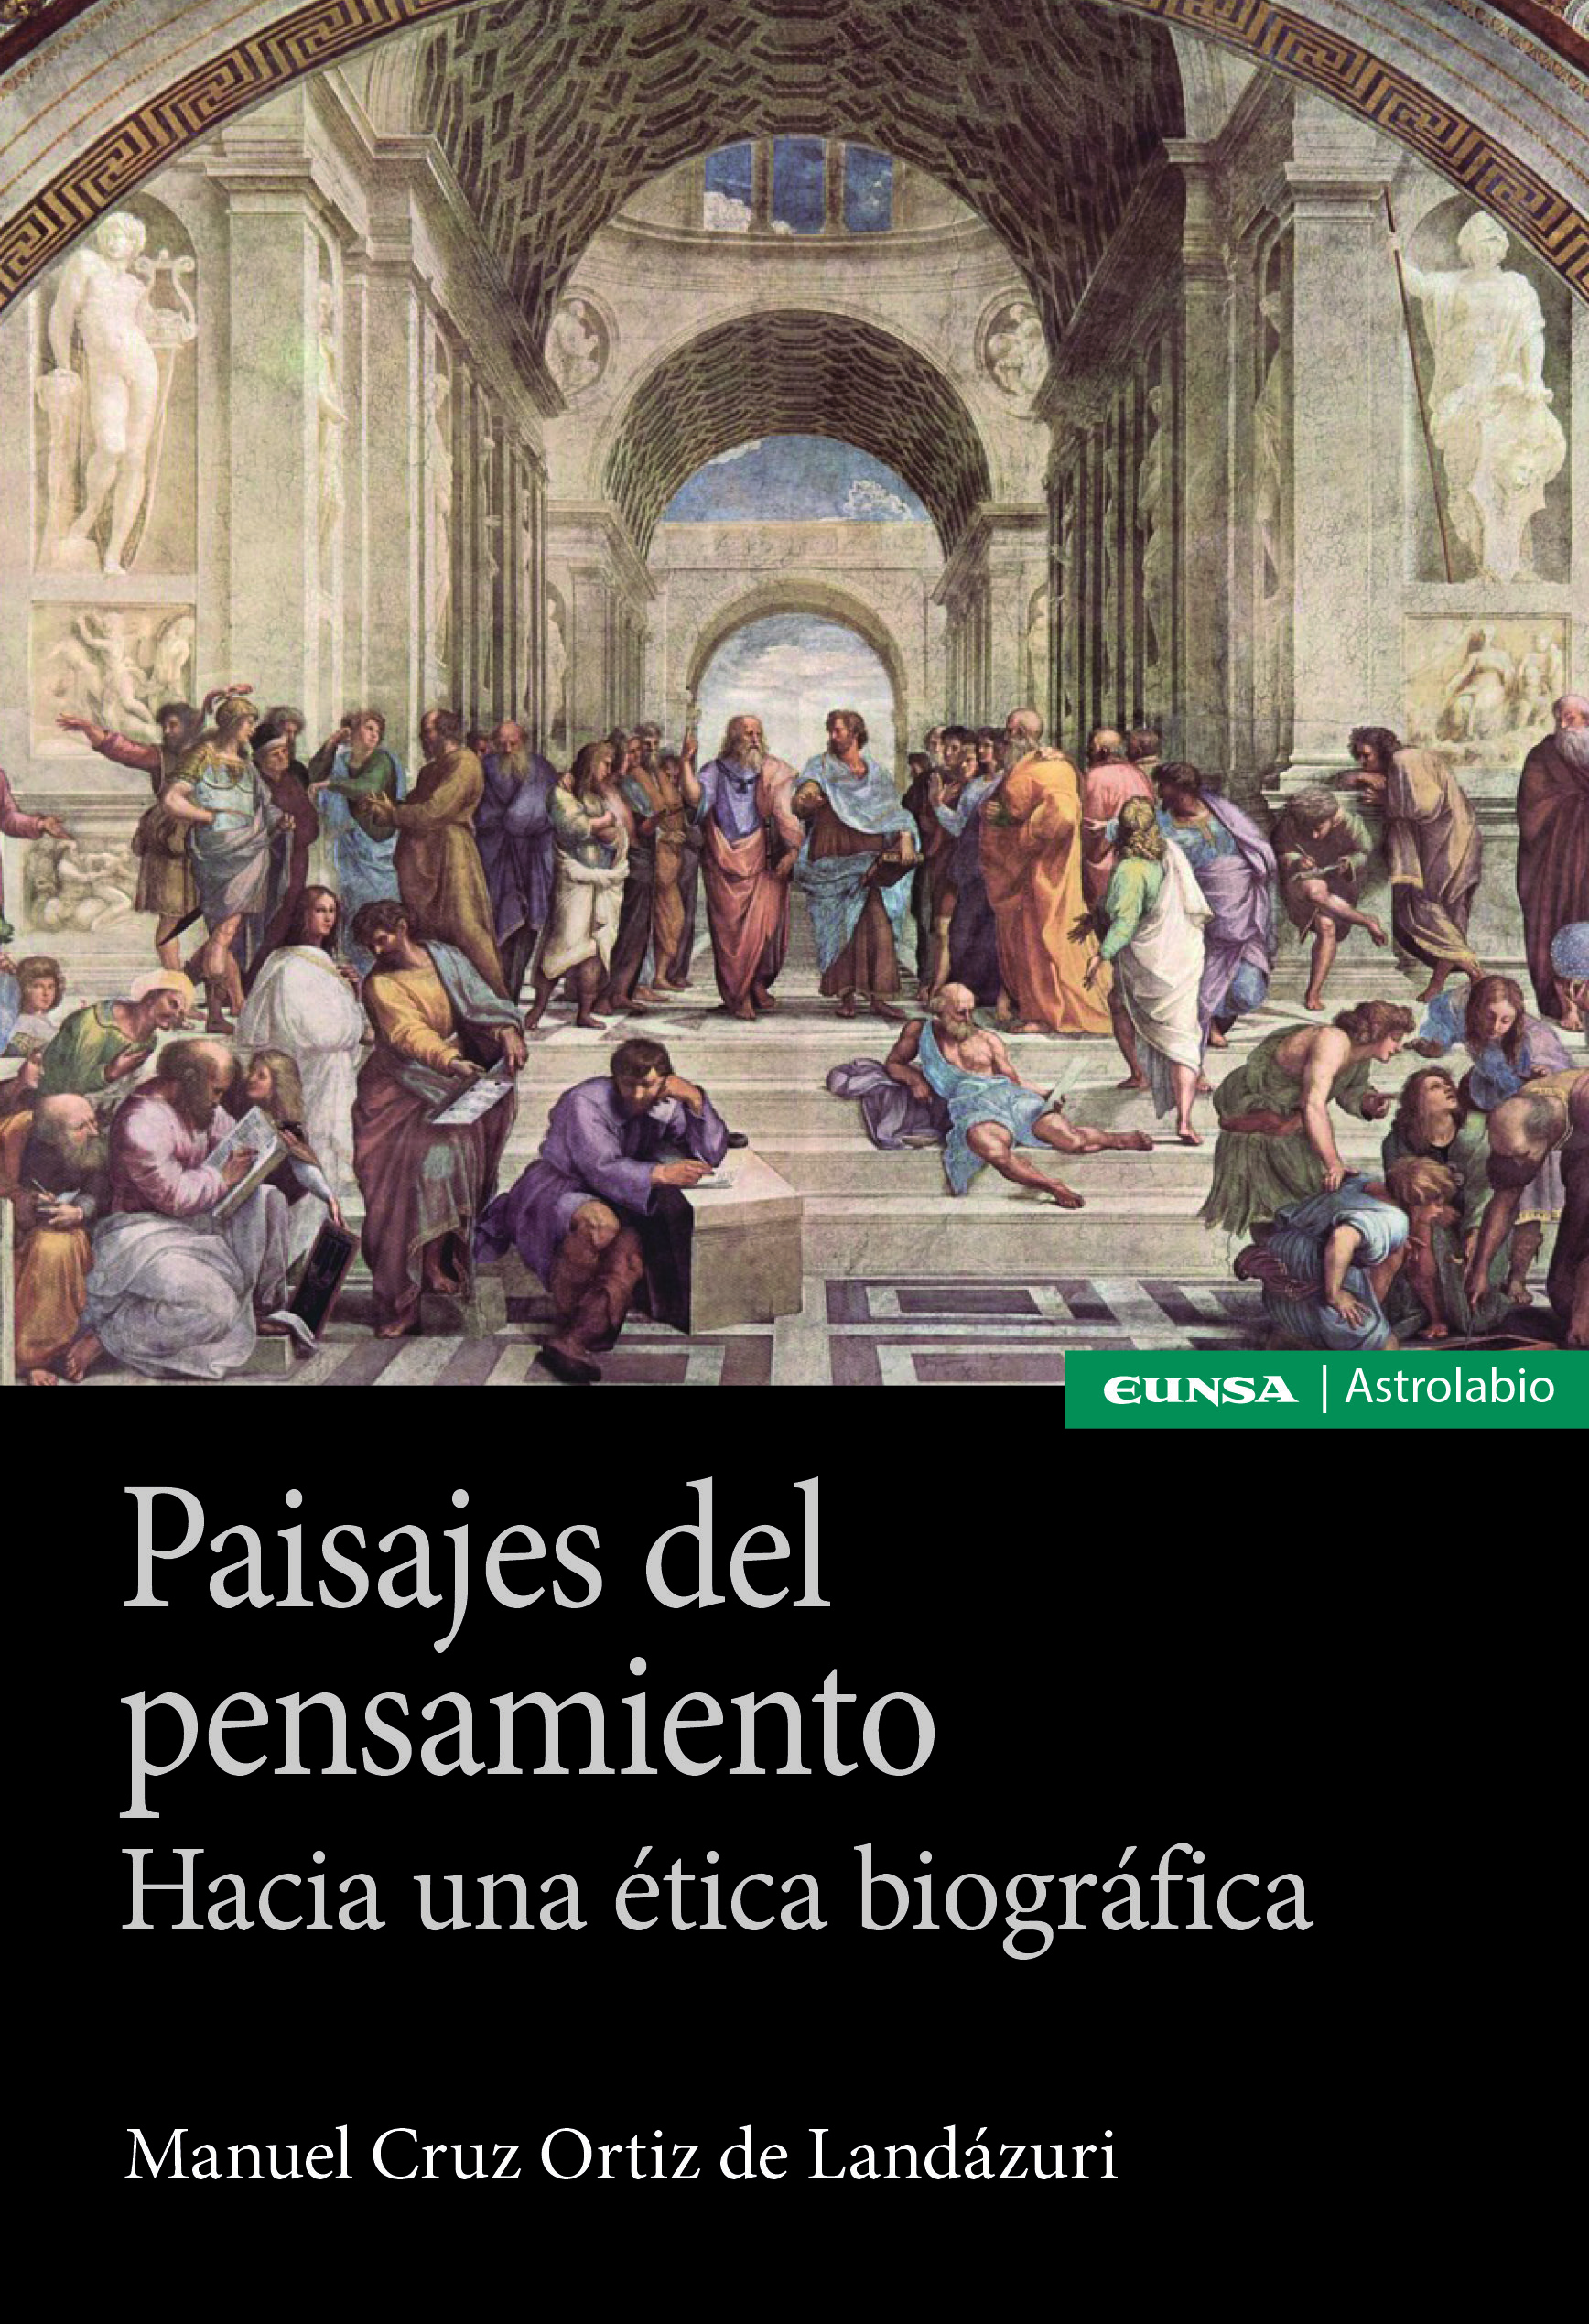 https://www.eunsa.es/libro/paisajes-del-pensamiento_148923/